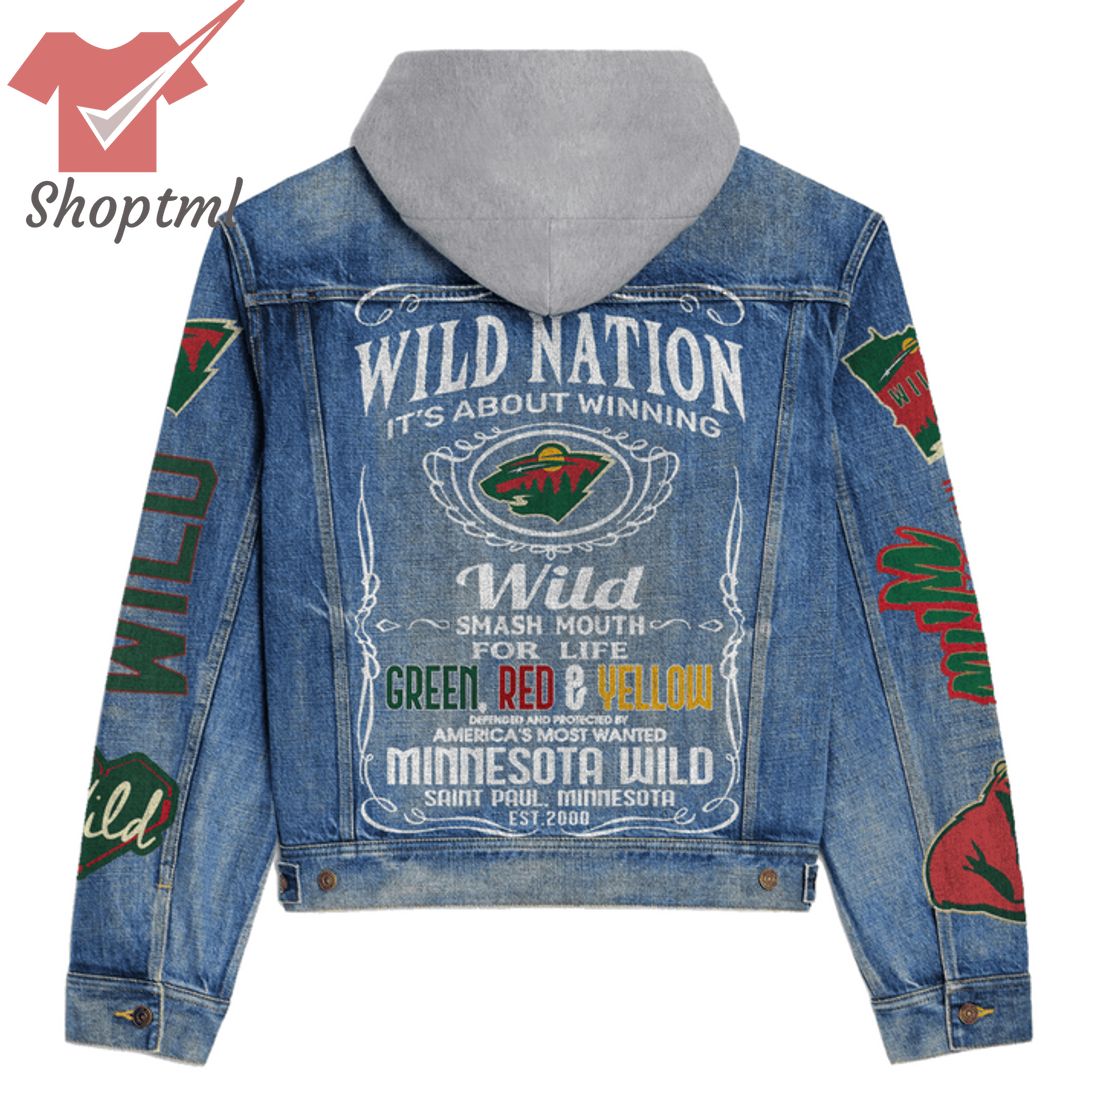 Minnesota Wild Nation It's About Winning Hooded Denim Jacket